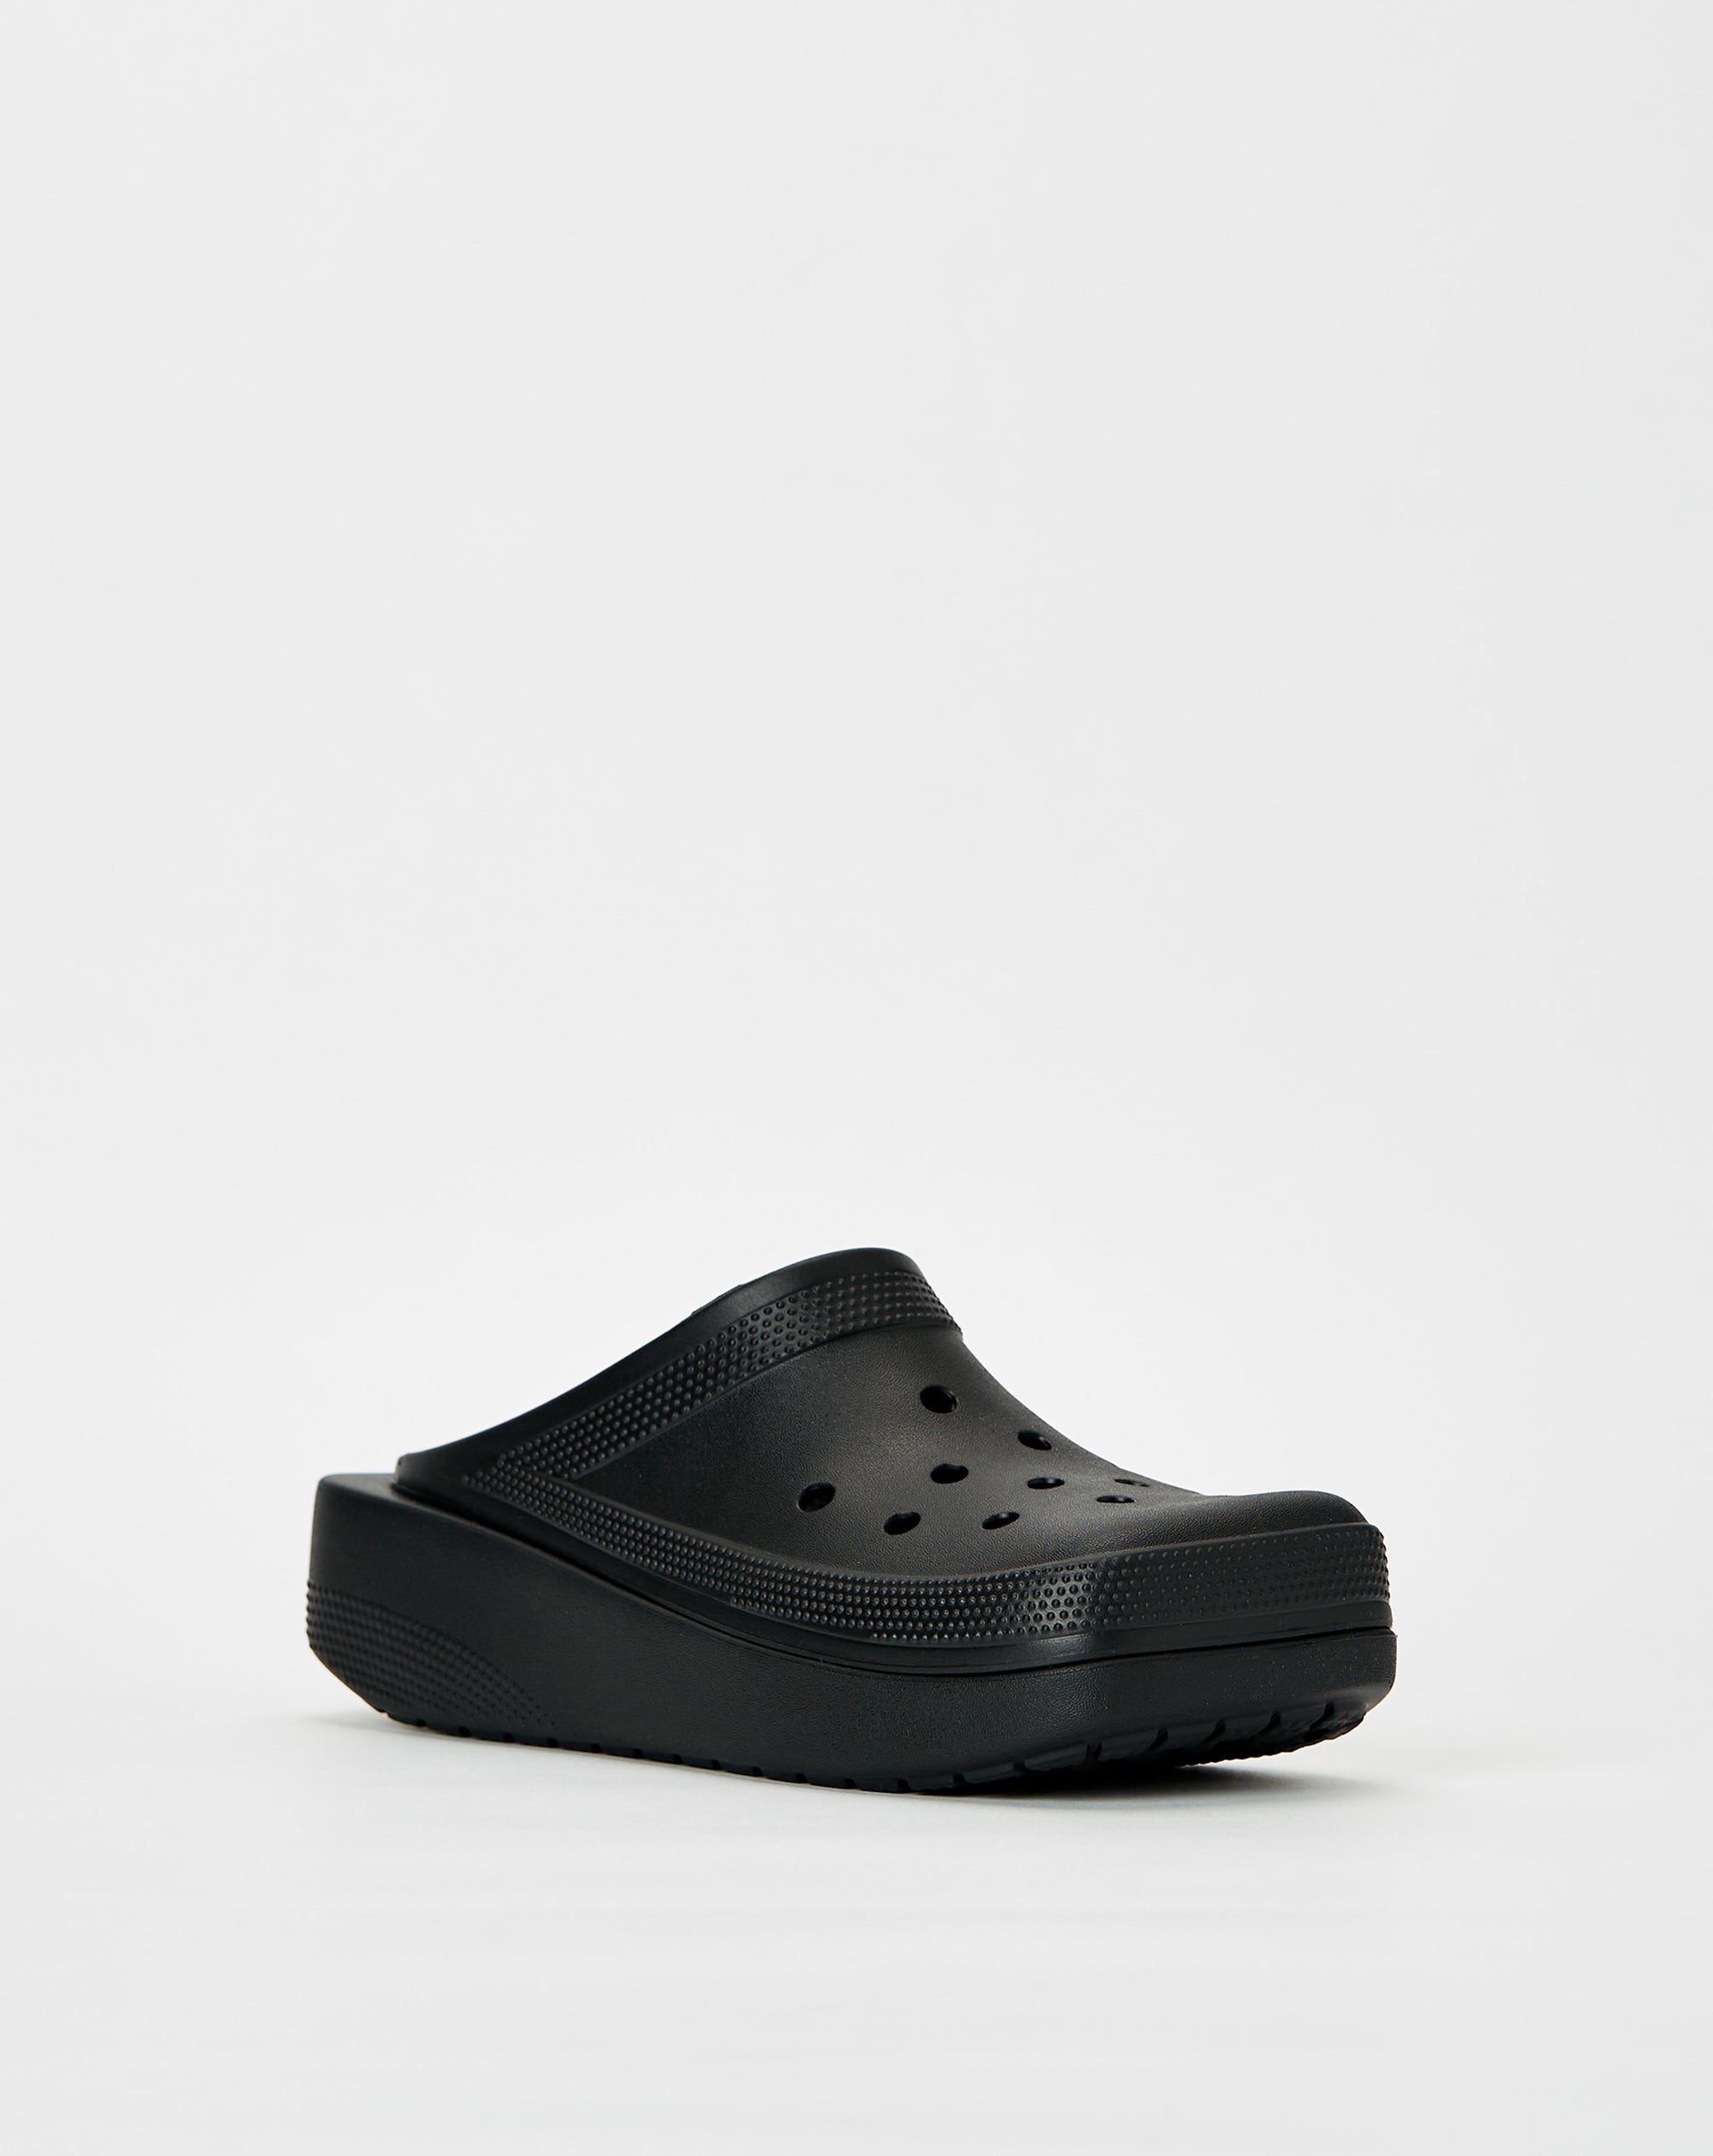 Crocs Classic Blunt Toe - Rule of Next Footwear